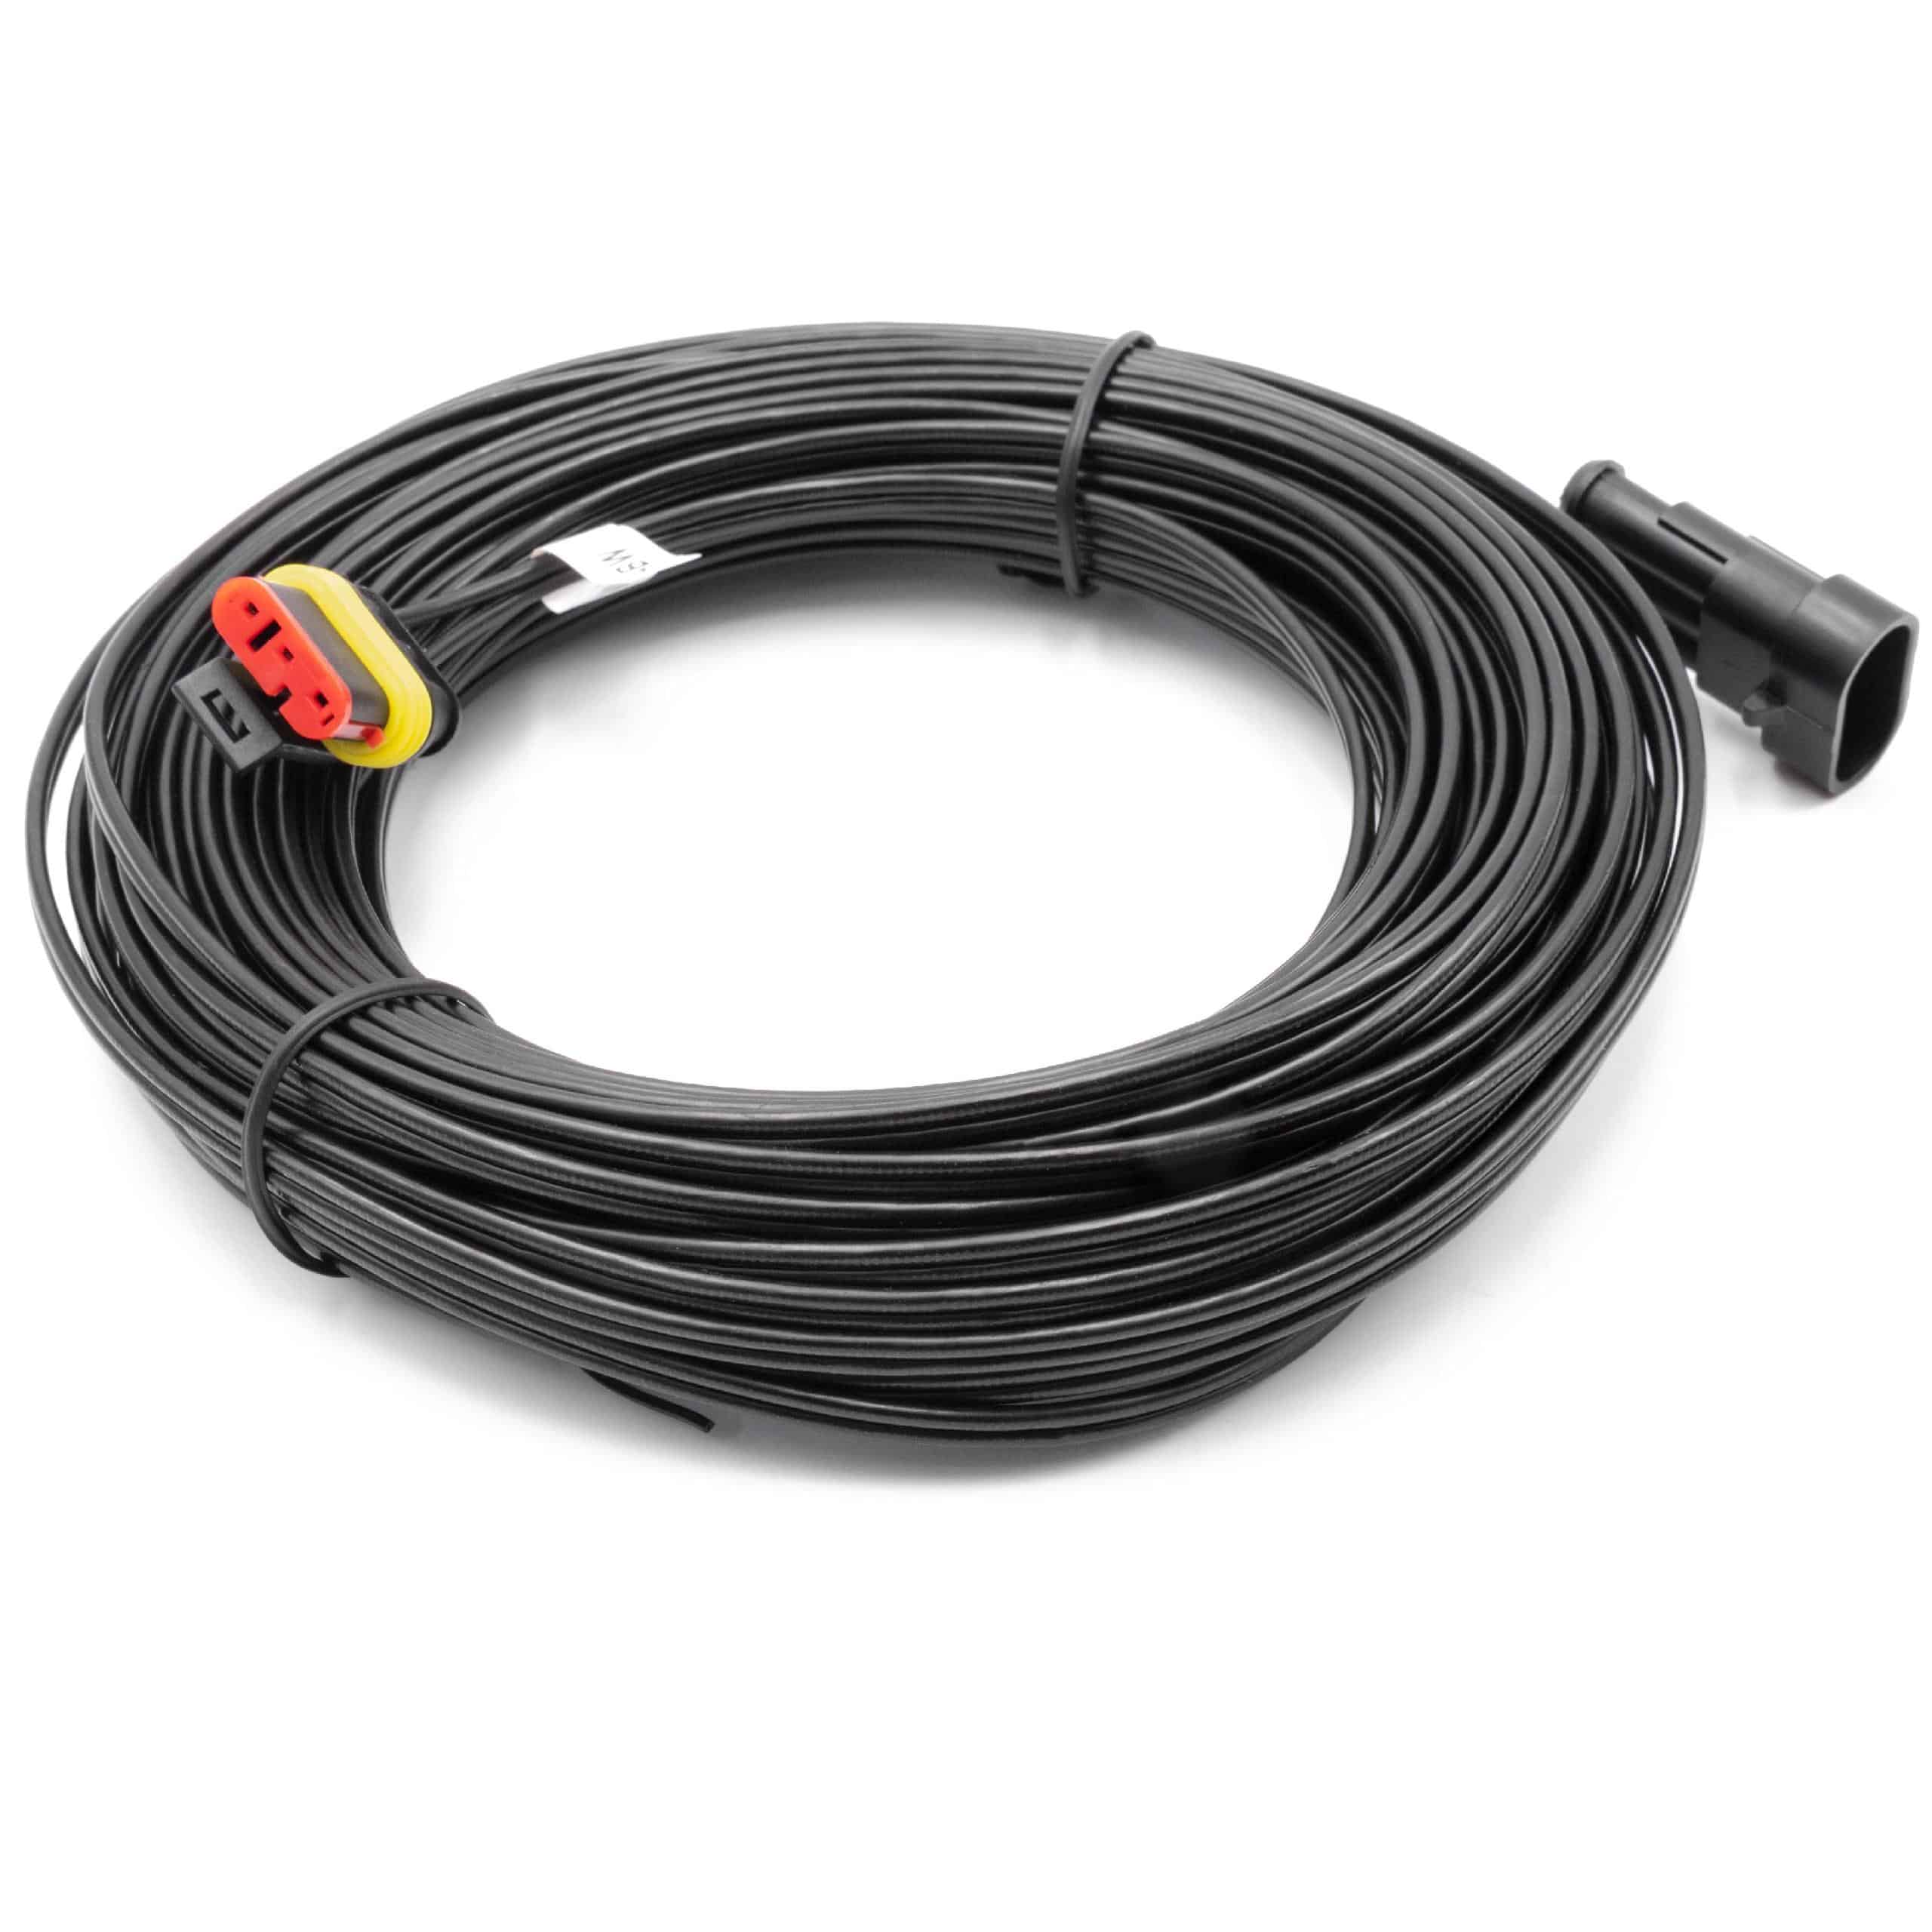 Low Voltage Cable replaces Gardena 00057-98.251.01 for McCullochRobot Lawn Mower etc. 20 m